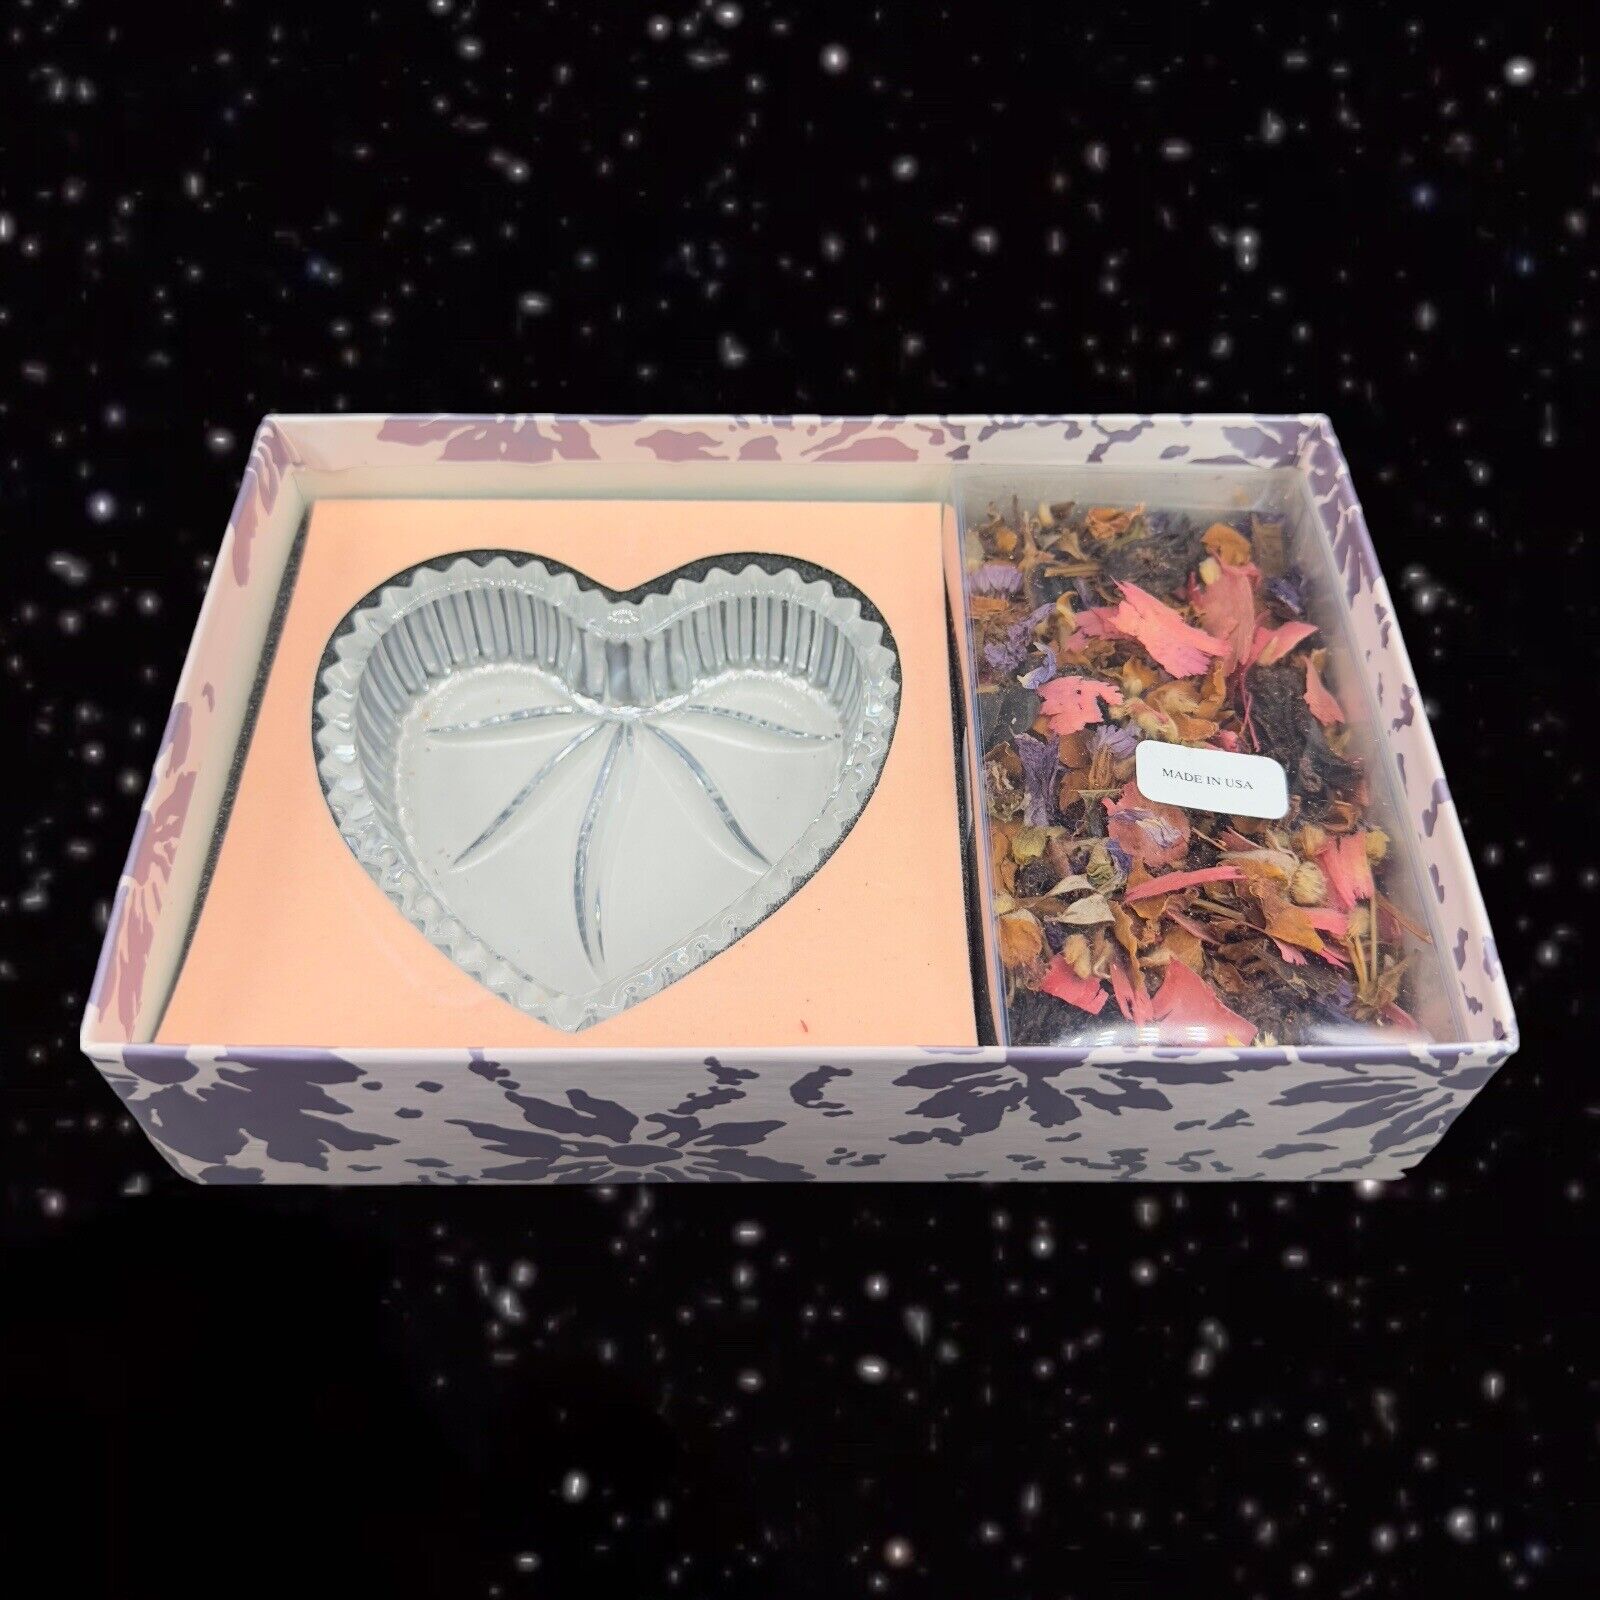 WEDGWOOD HEART CLEAR CRYSTAL SHAPED TRINKET BOX W Box & Potpourri SET NEW IN BOX